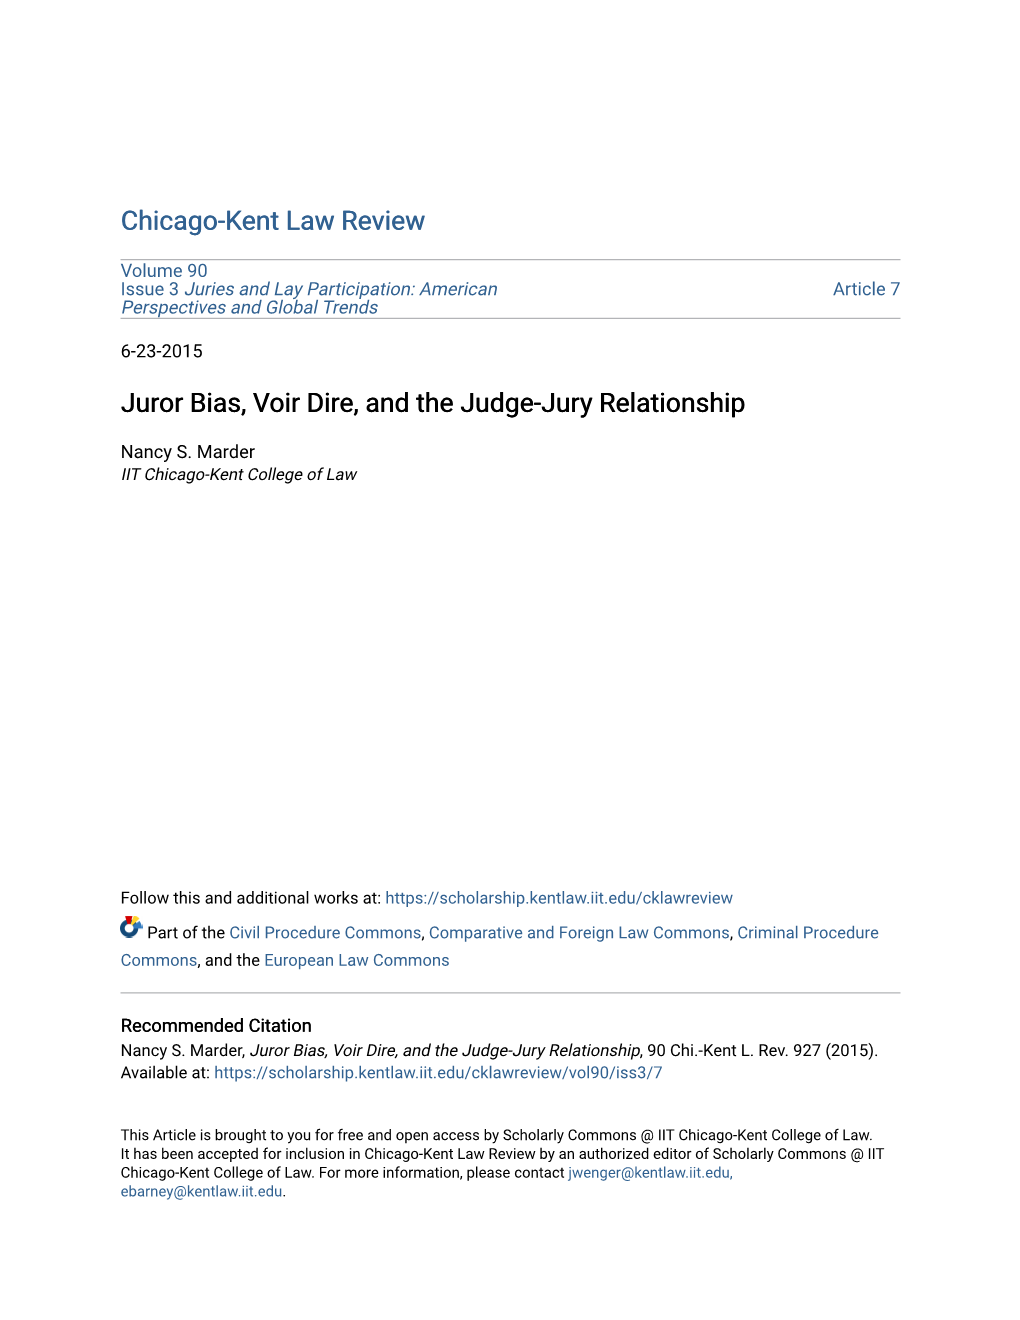 Juror Bias, Voir Dire, and the Judge-Jury Relationship